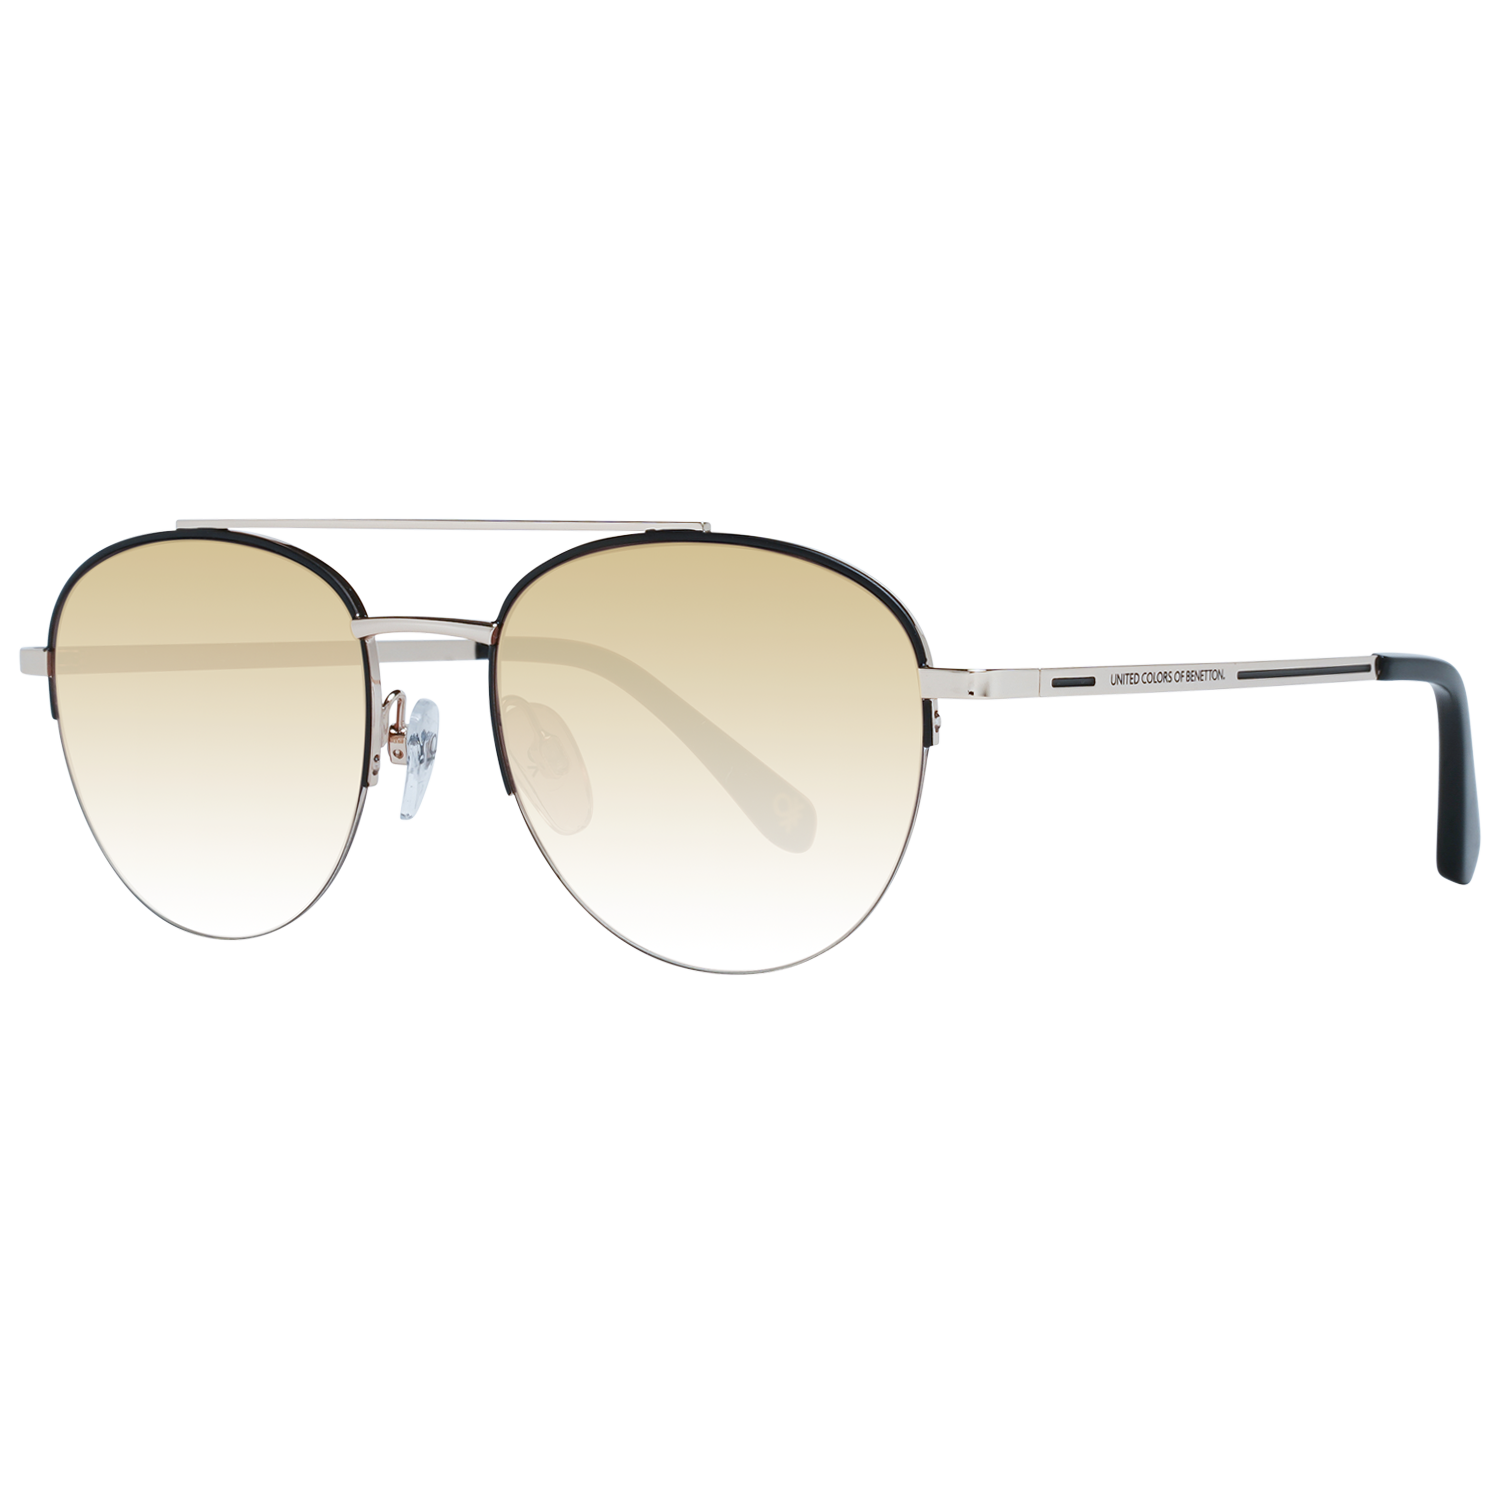 Benetton Sunglasses Benetton Sunglasses BE7028 2 50 Eyeglasses Eyewear UK USA Australia 